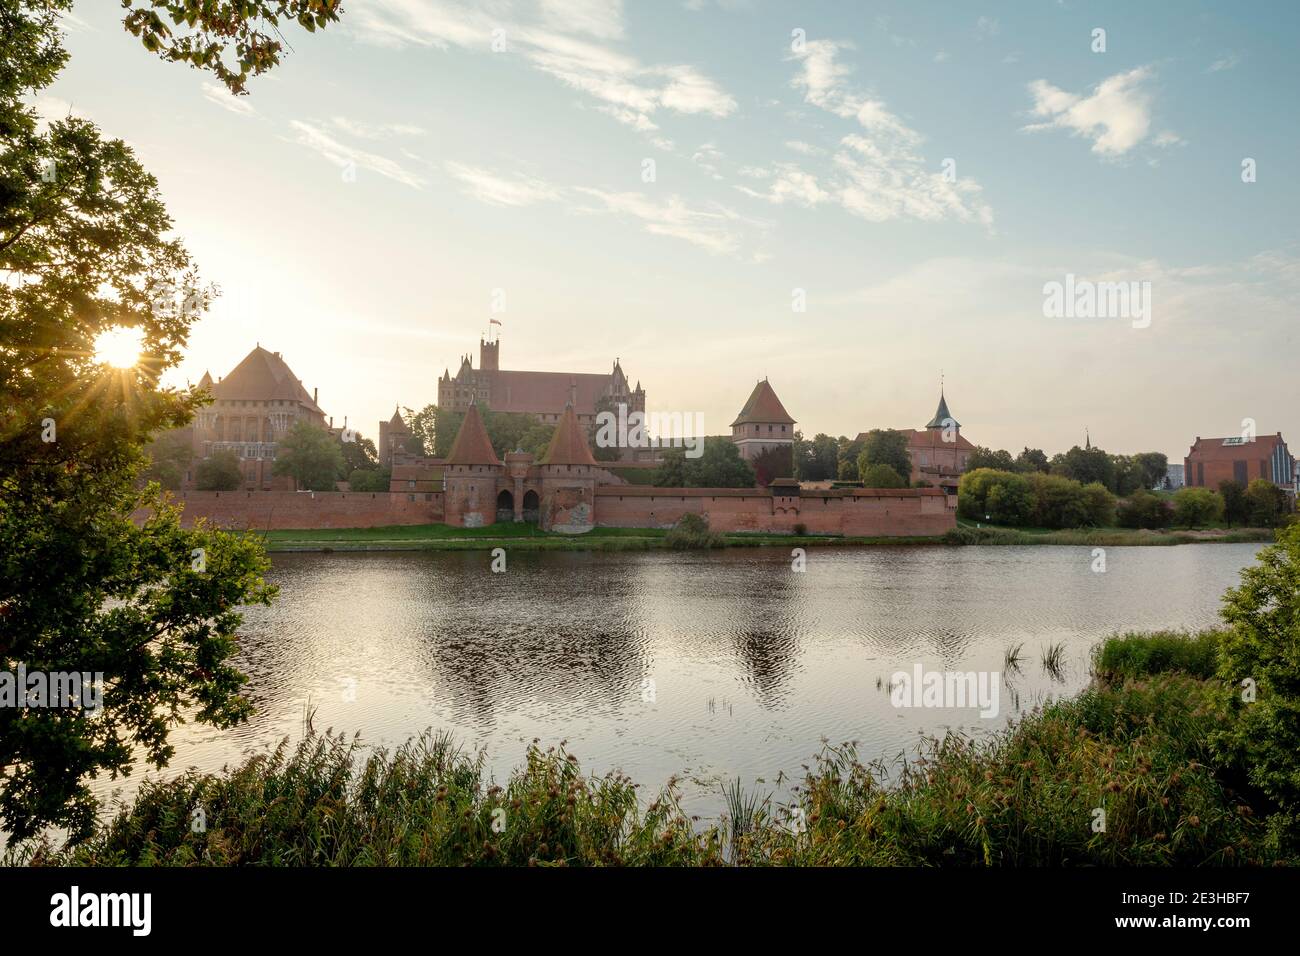 Panorama of medieval teutonic castle in Malbork, Poland Stock Photo